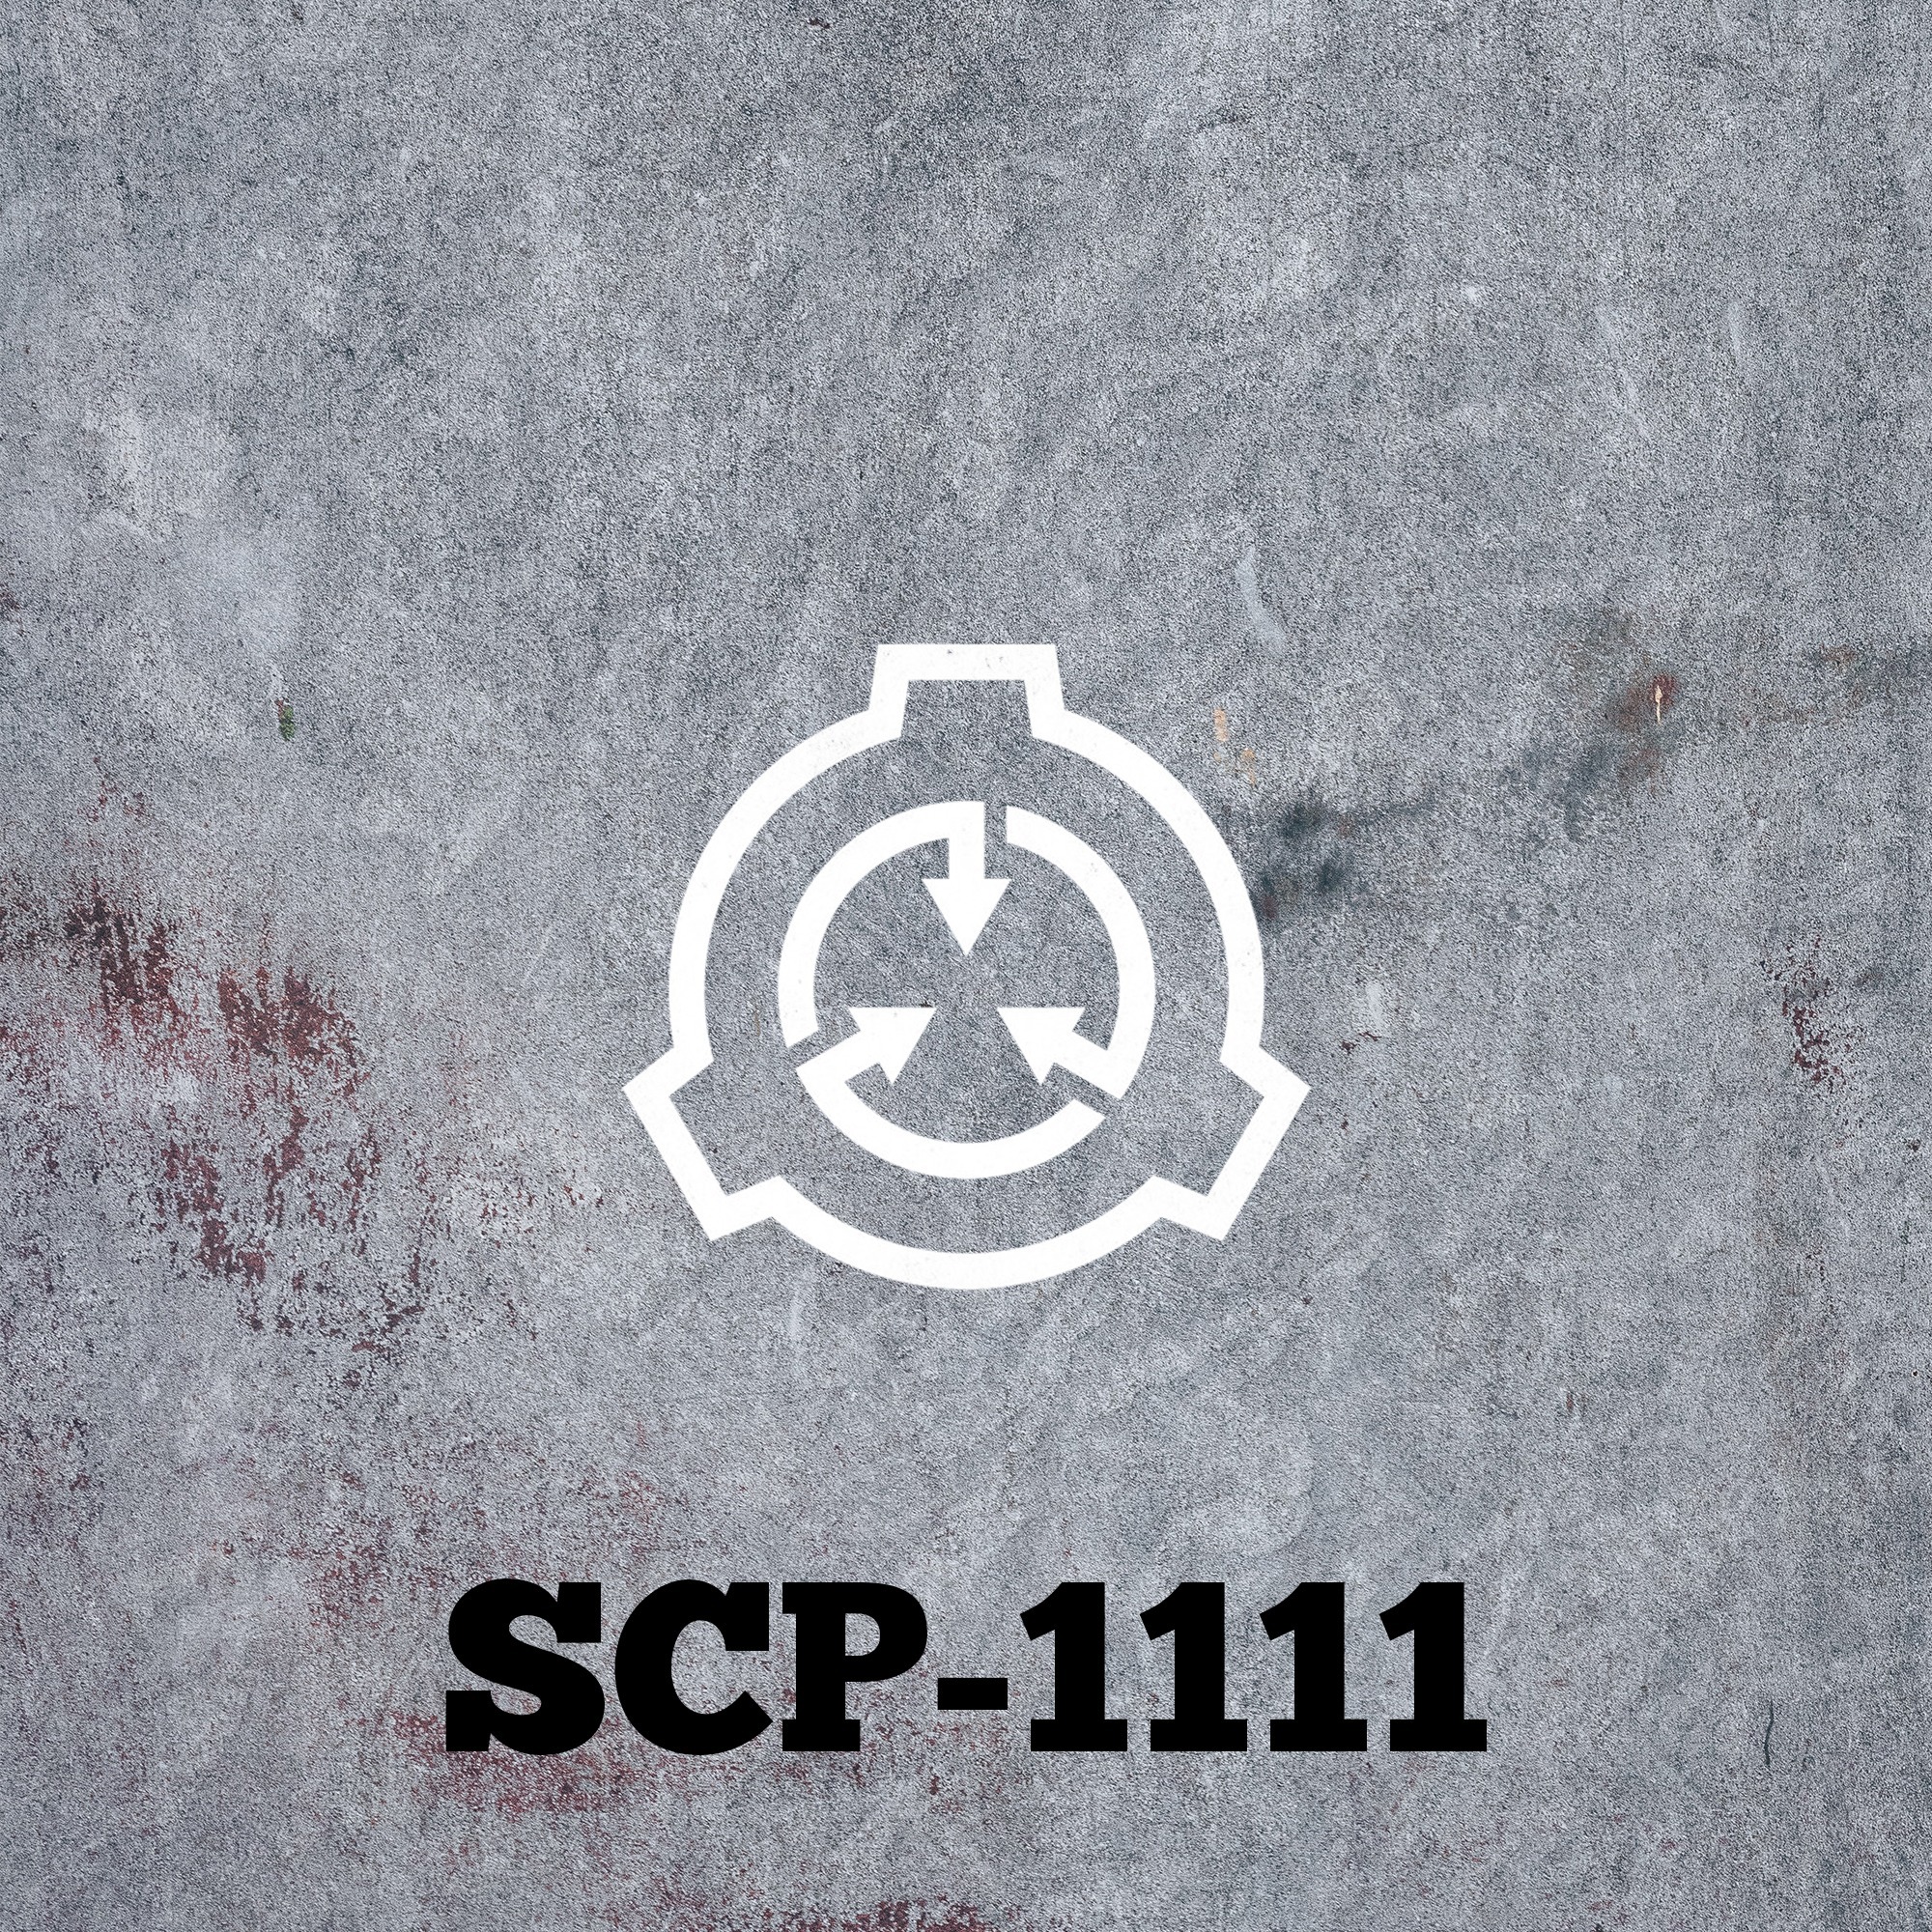 SCP-1111: The White Dog